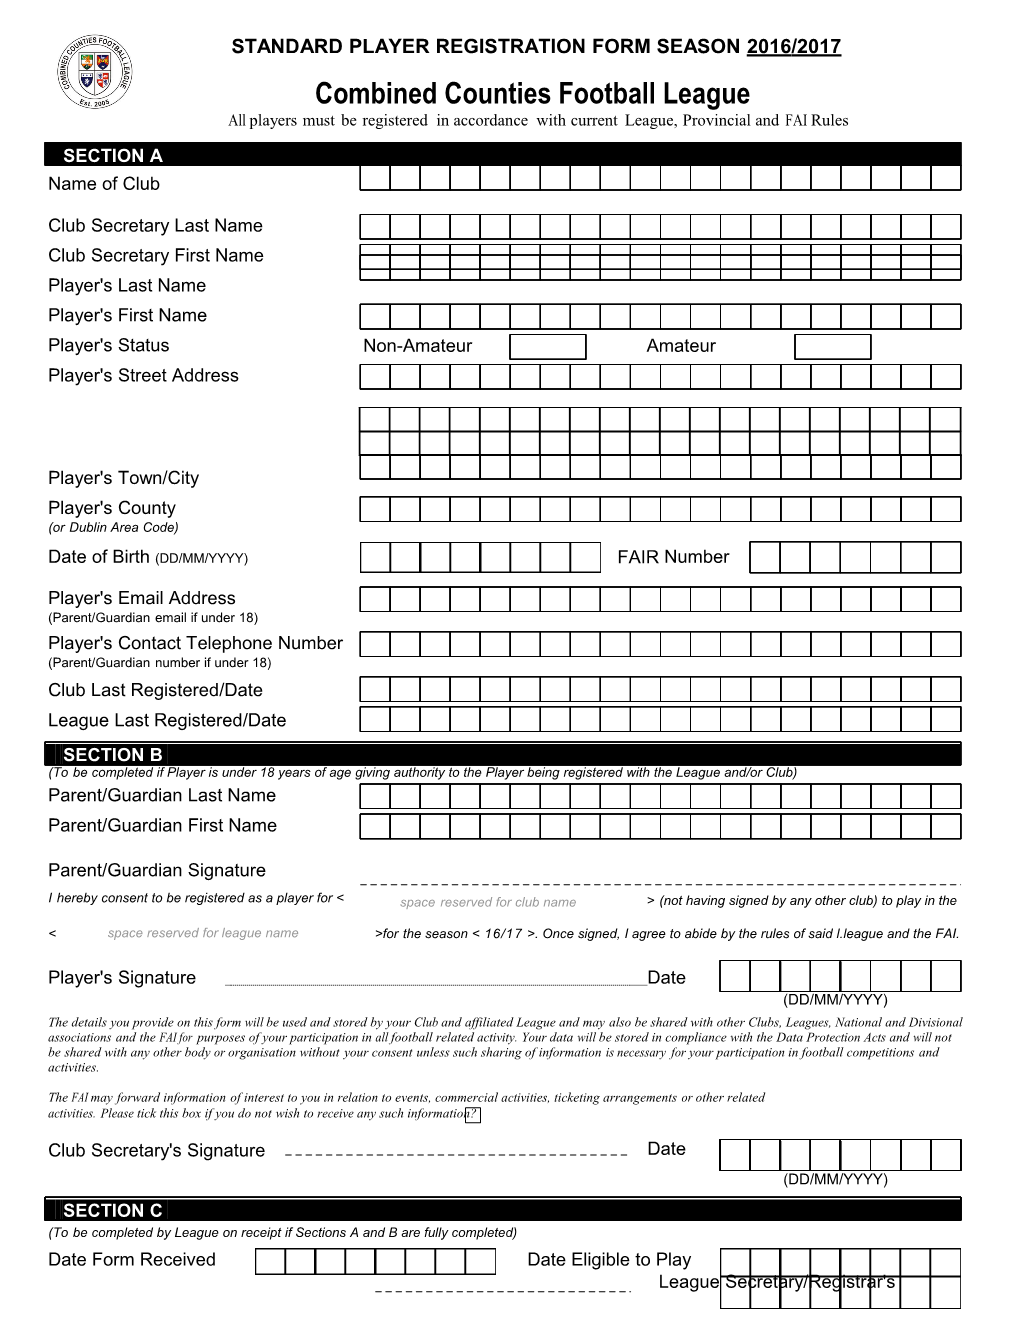 Standard Player Registration Form Season 2016/2017